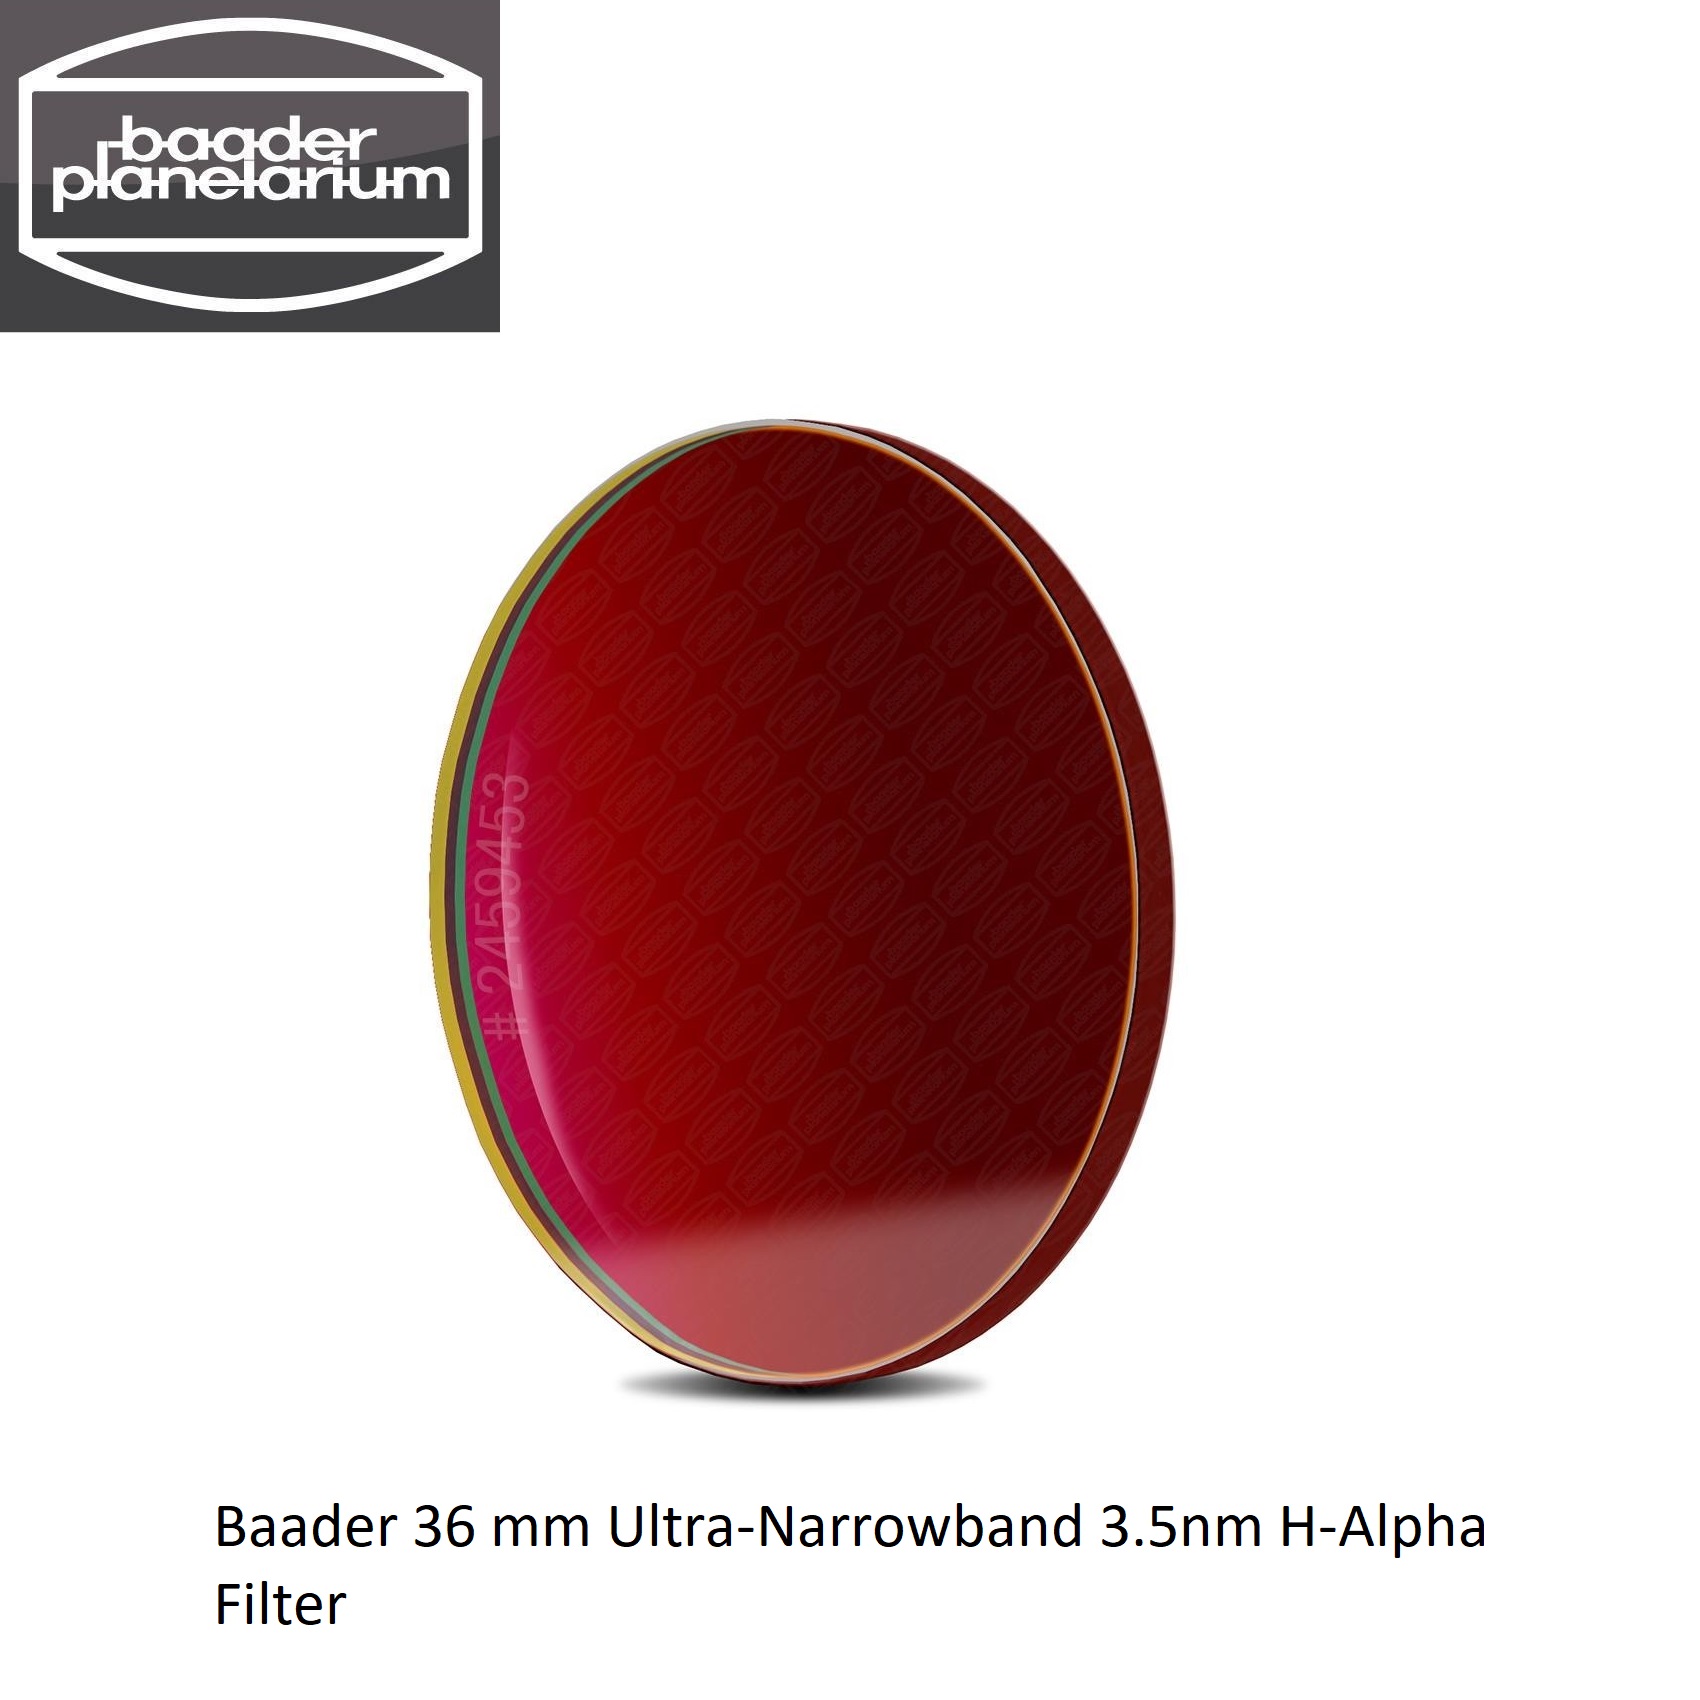 Baader 36 mm Ultra-Narrowband 3.5nm H-Alpha Filter